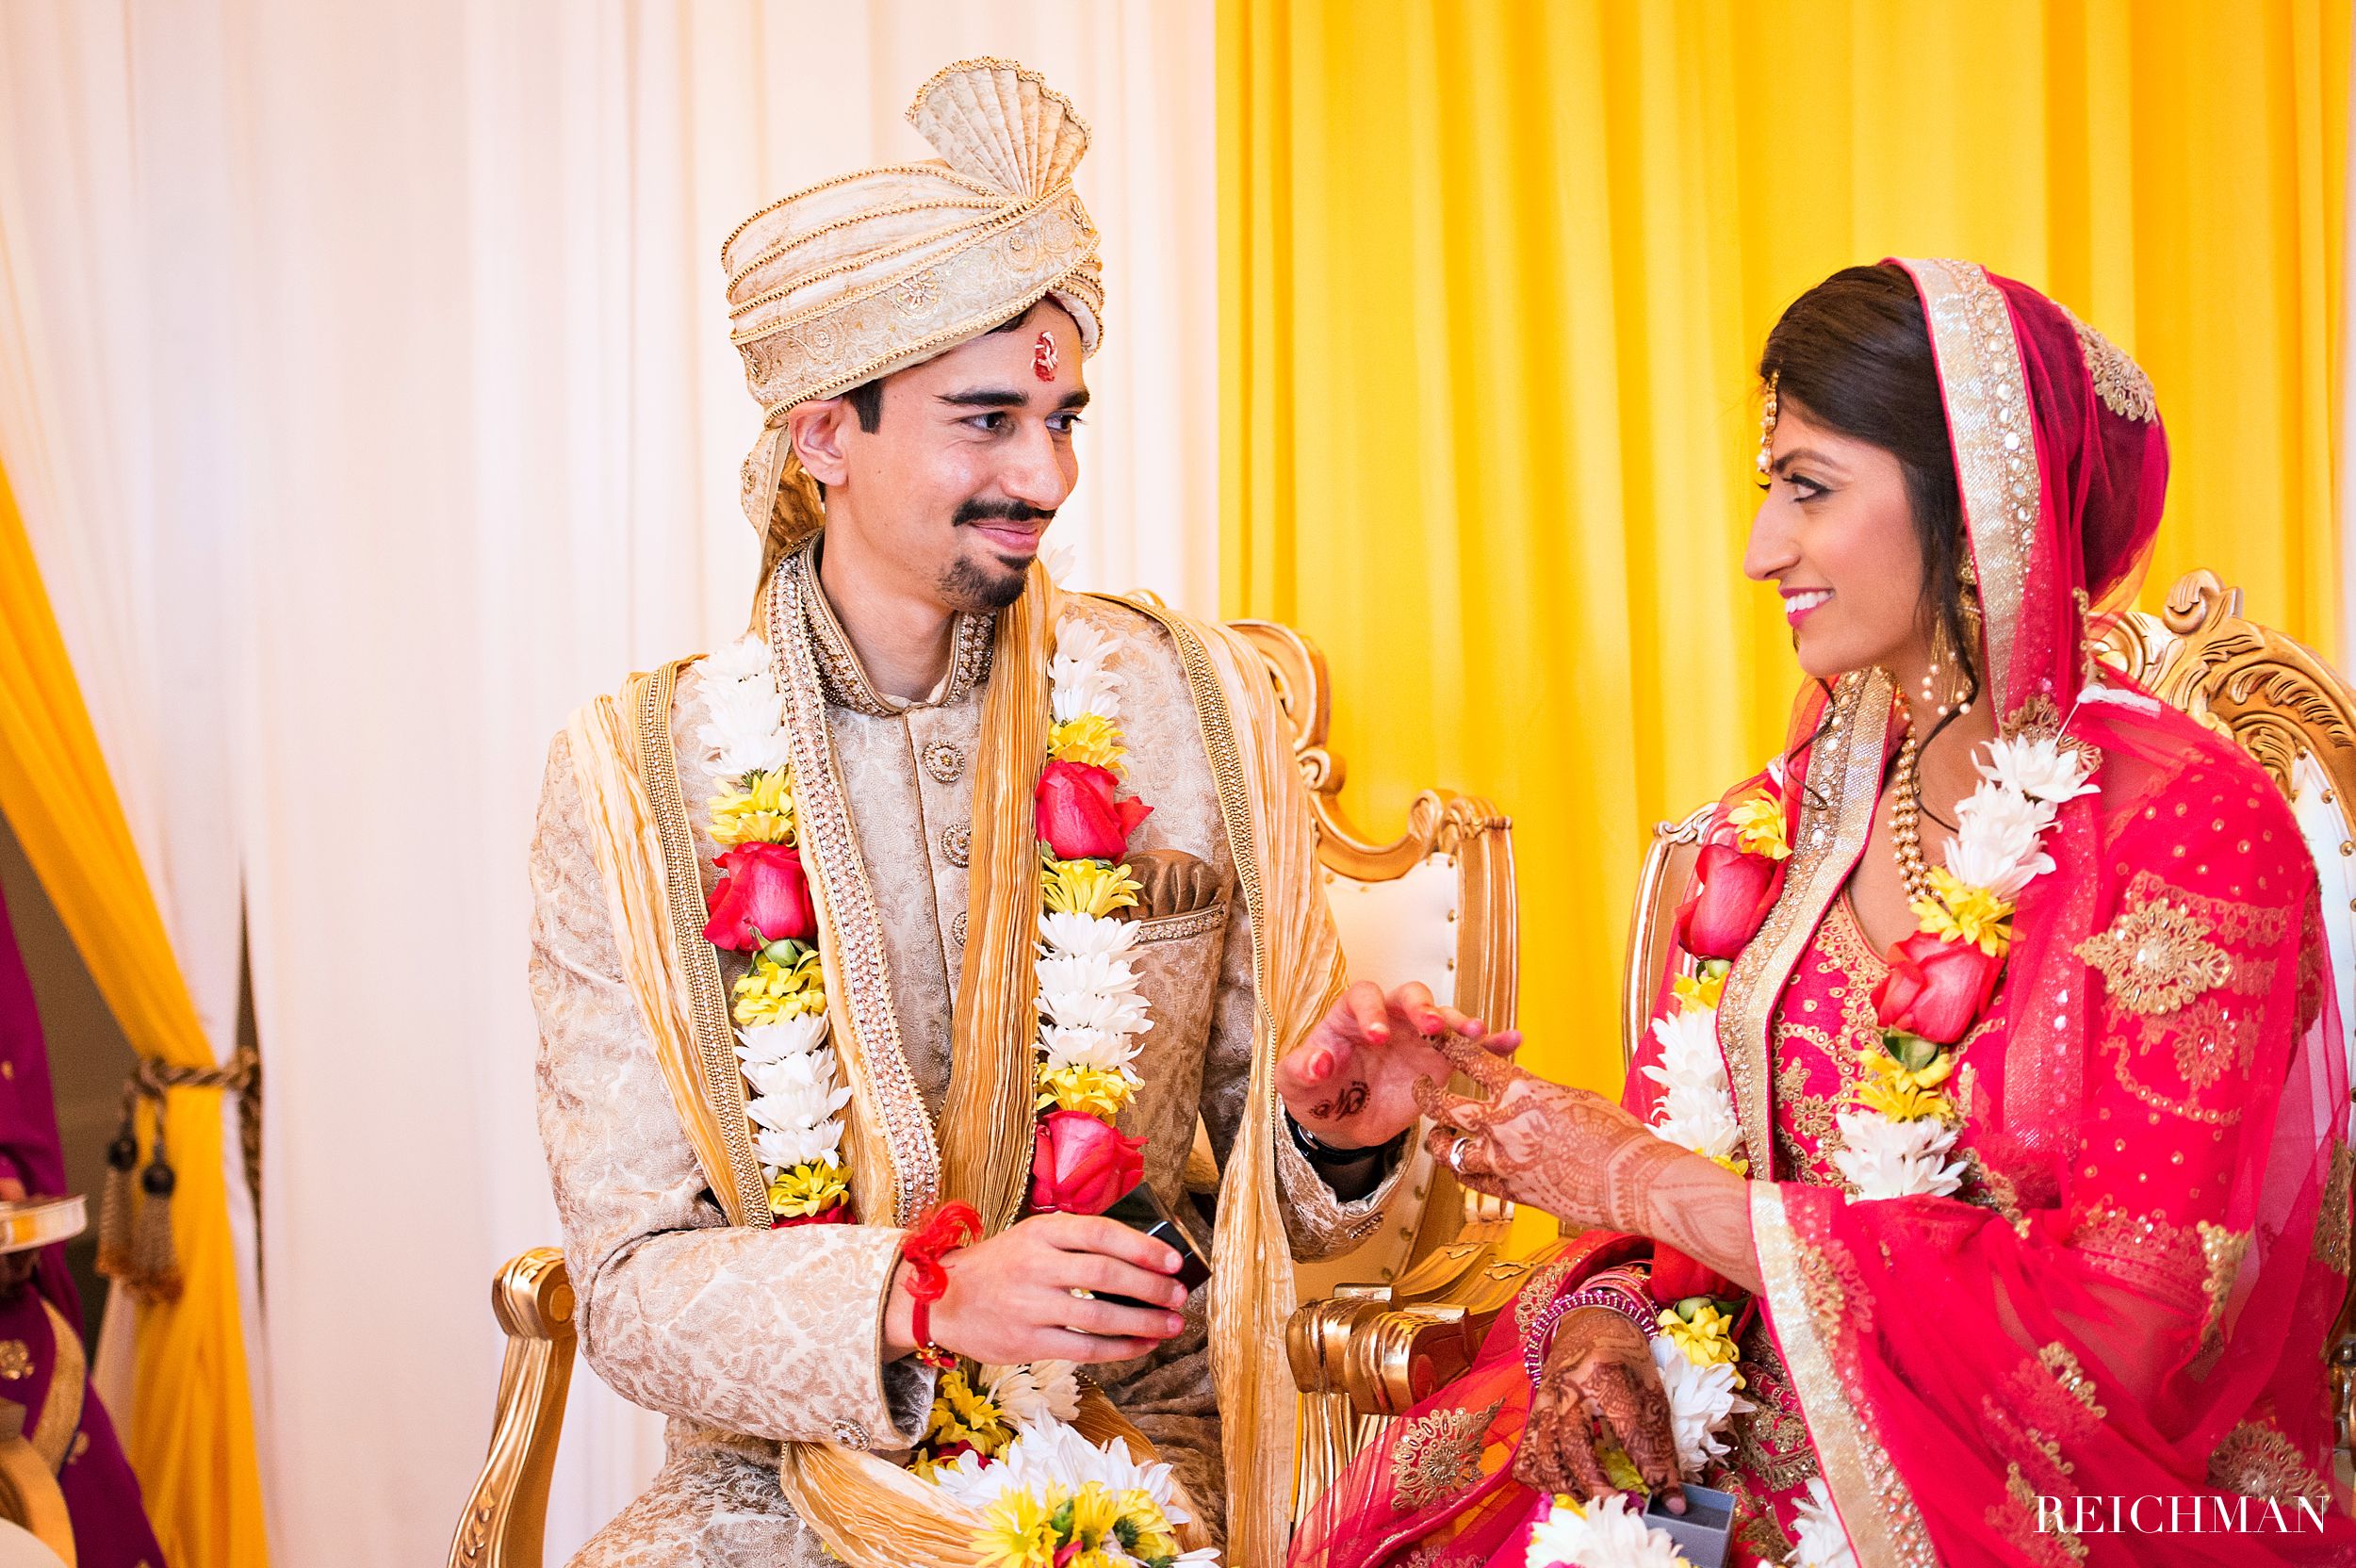 062st-regis-atlanta-hindu-wedding-062